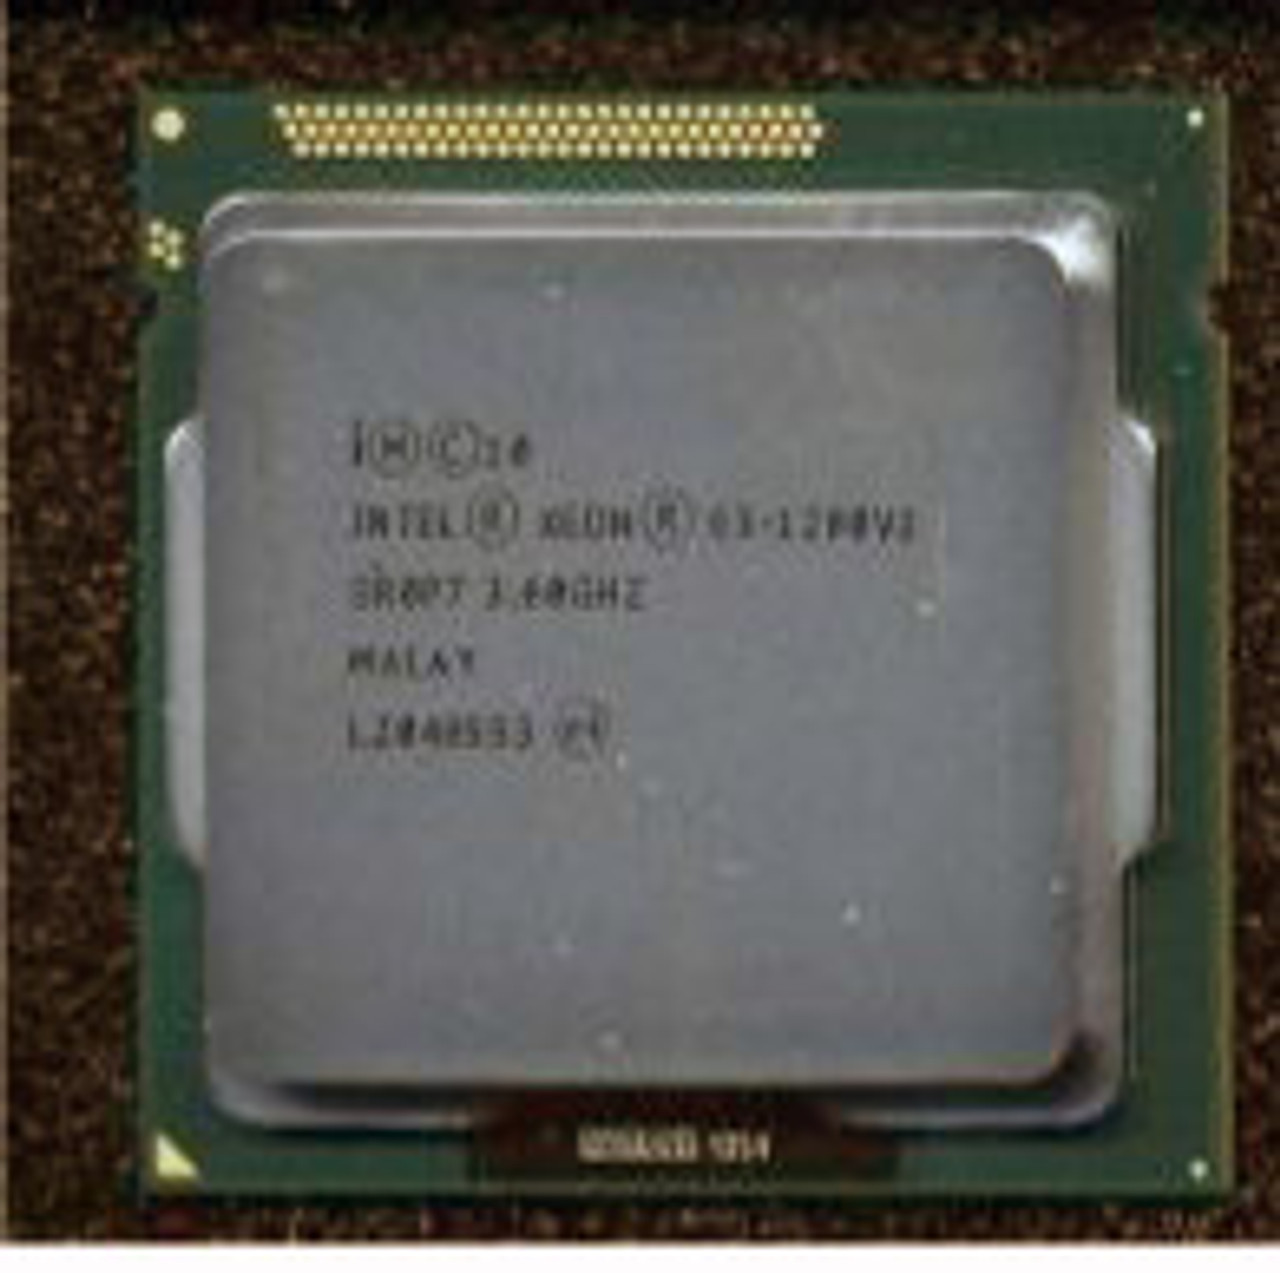 SPS-PROC XEON IB E3 1280 v2 8M 3.6 GHz - 686682-001